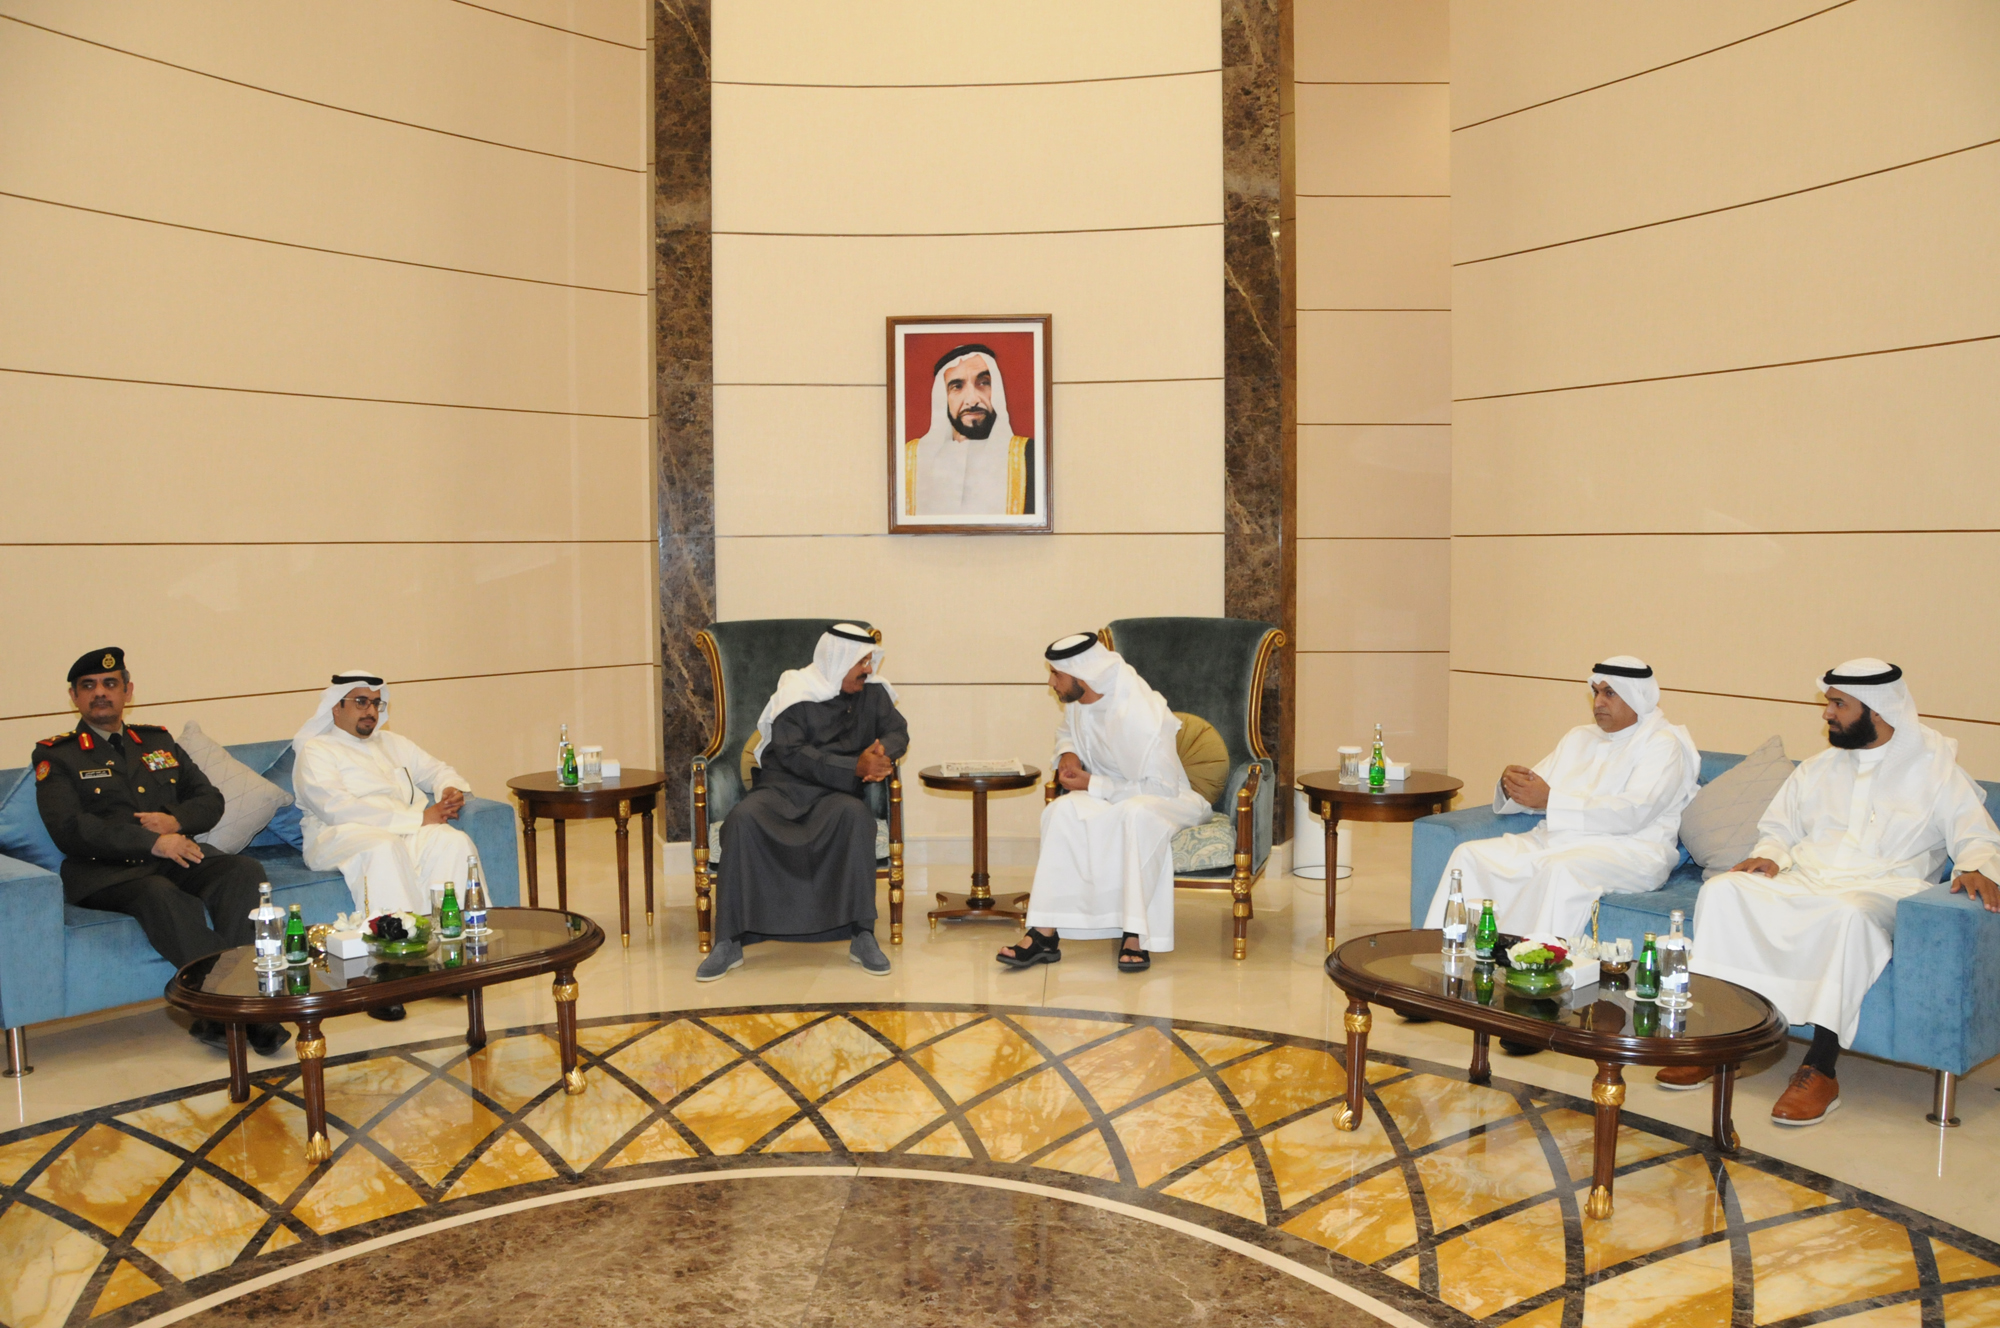 Sheikh Ahmad Nawaf Al-Ahmad Al-Jaber Al-Sabah arrived in UAE